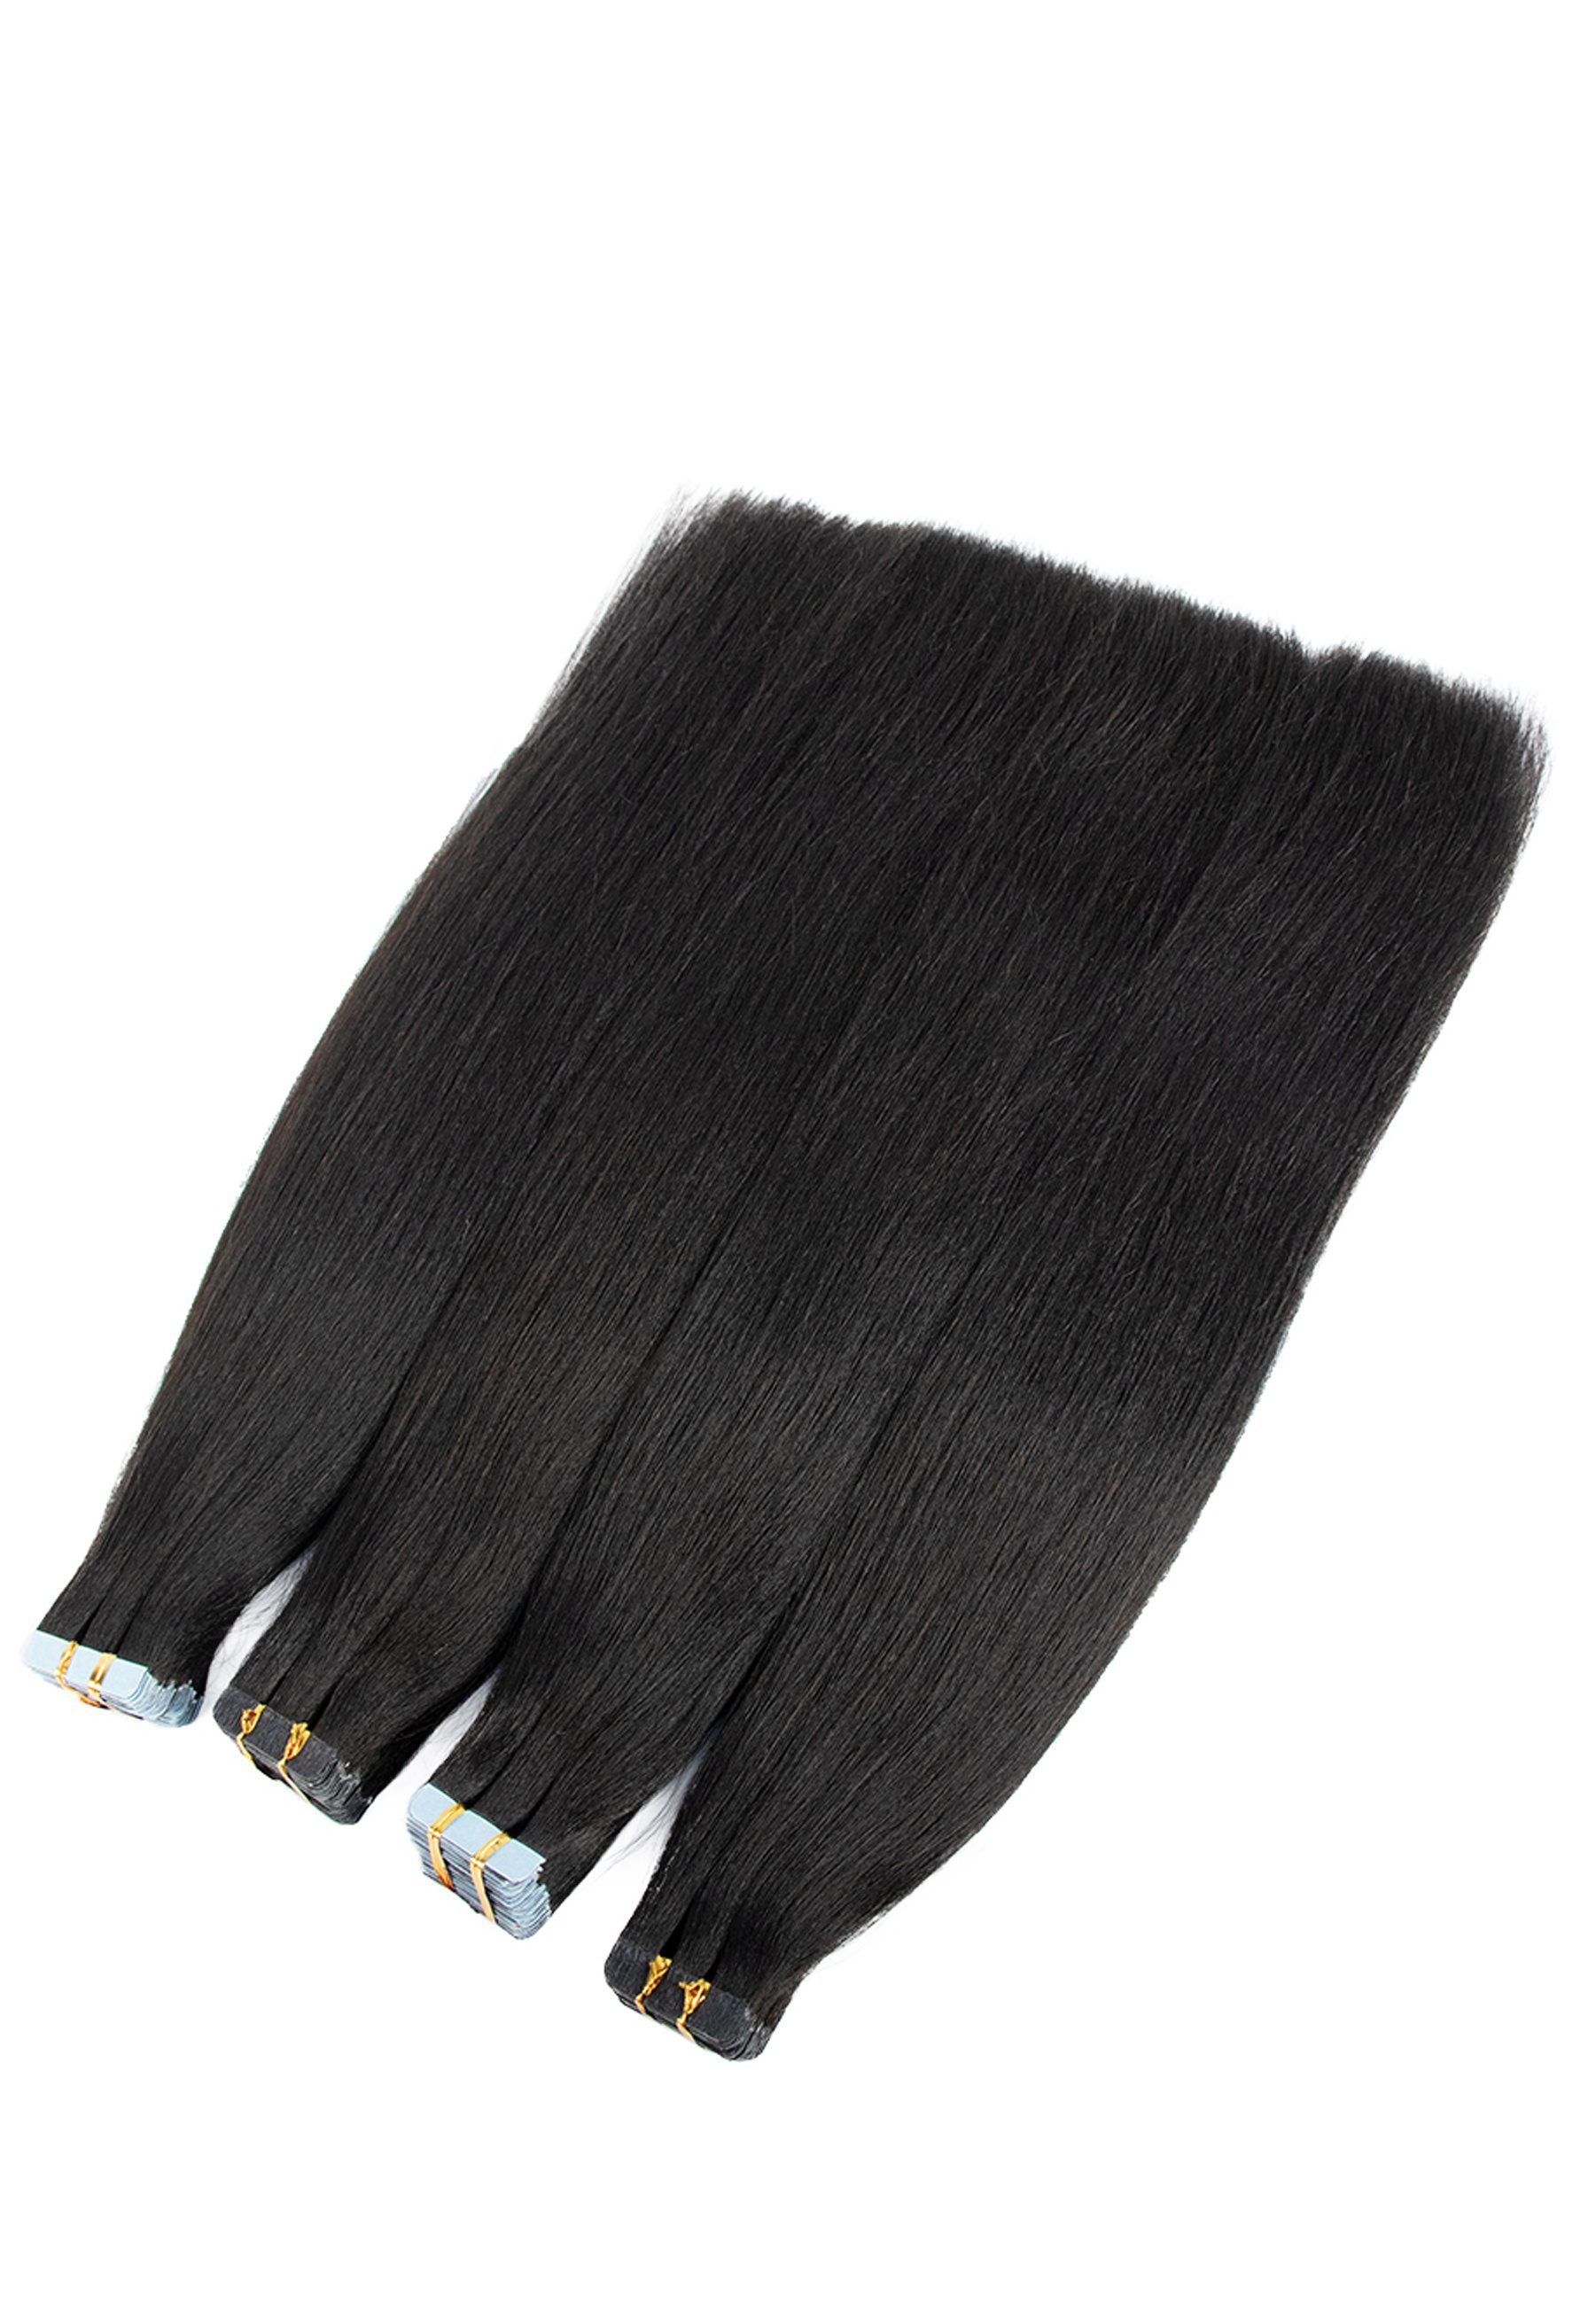 YC Menschenhaar Fashion Echthaar 100 25 cm Double black-50 gr, % #1b natural Hair Echthaar-Extension Remy Drawn Style & On-Extension Skin-Wefts Tape